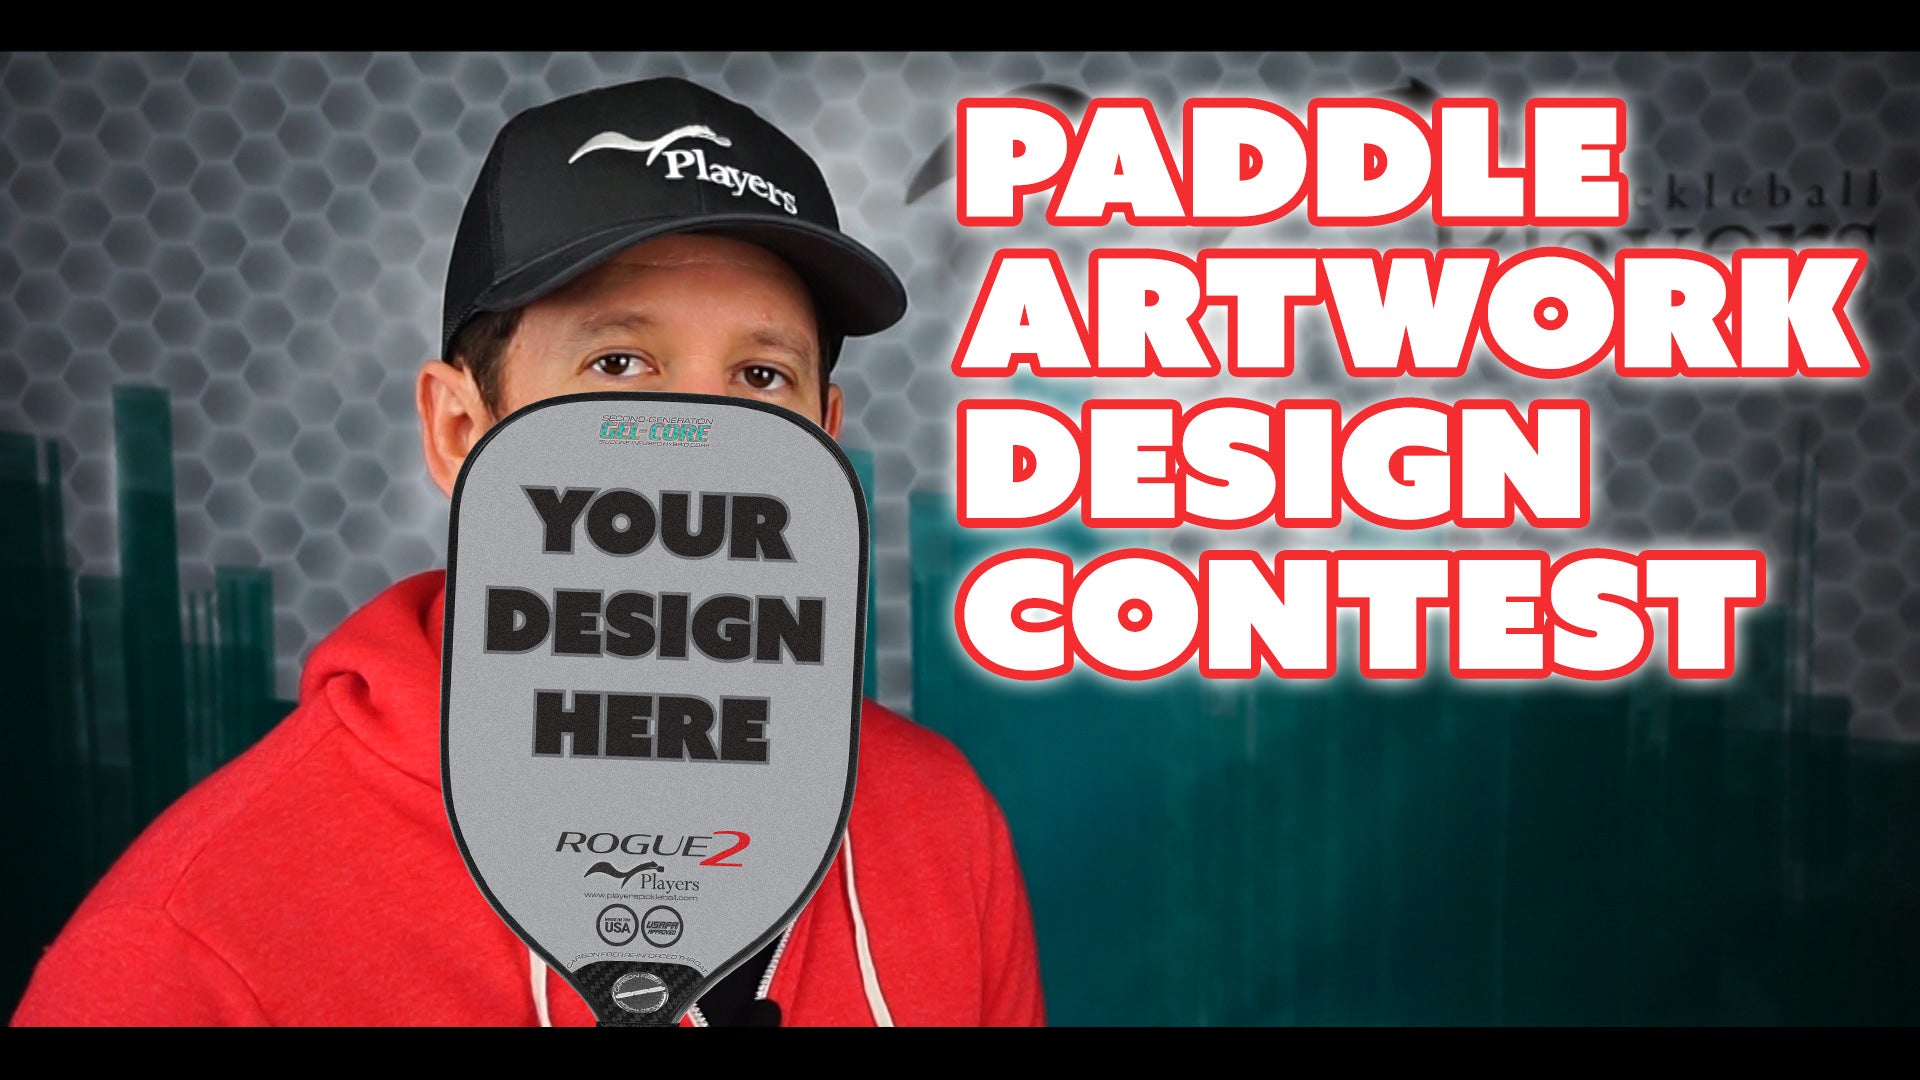 Paddle Artwork Design Competition!